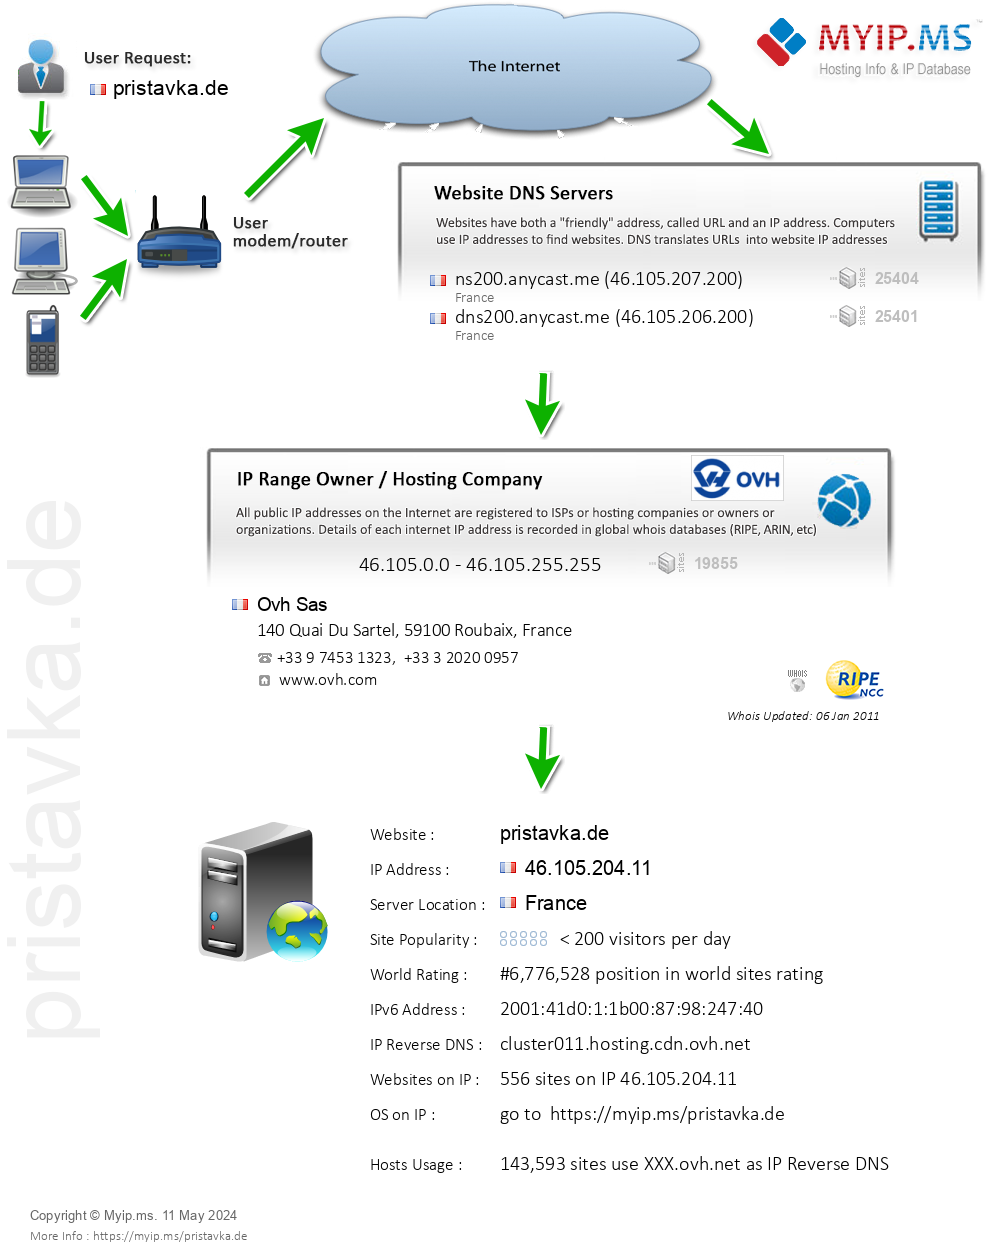 Pristavka.de - Website Hosting Visual IP Diagram